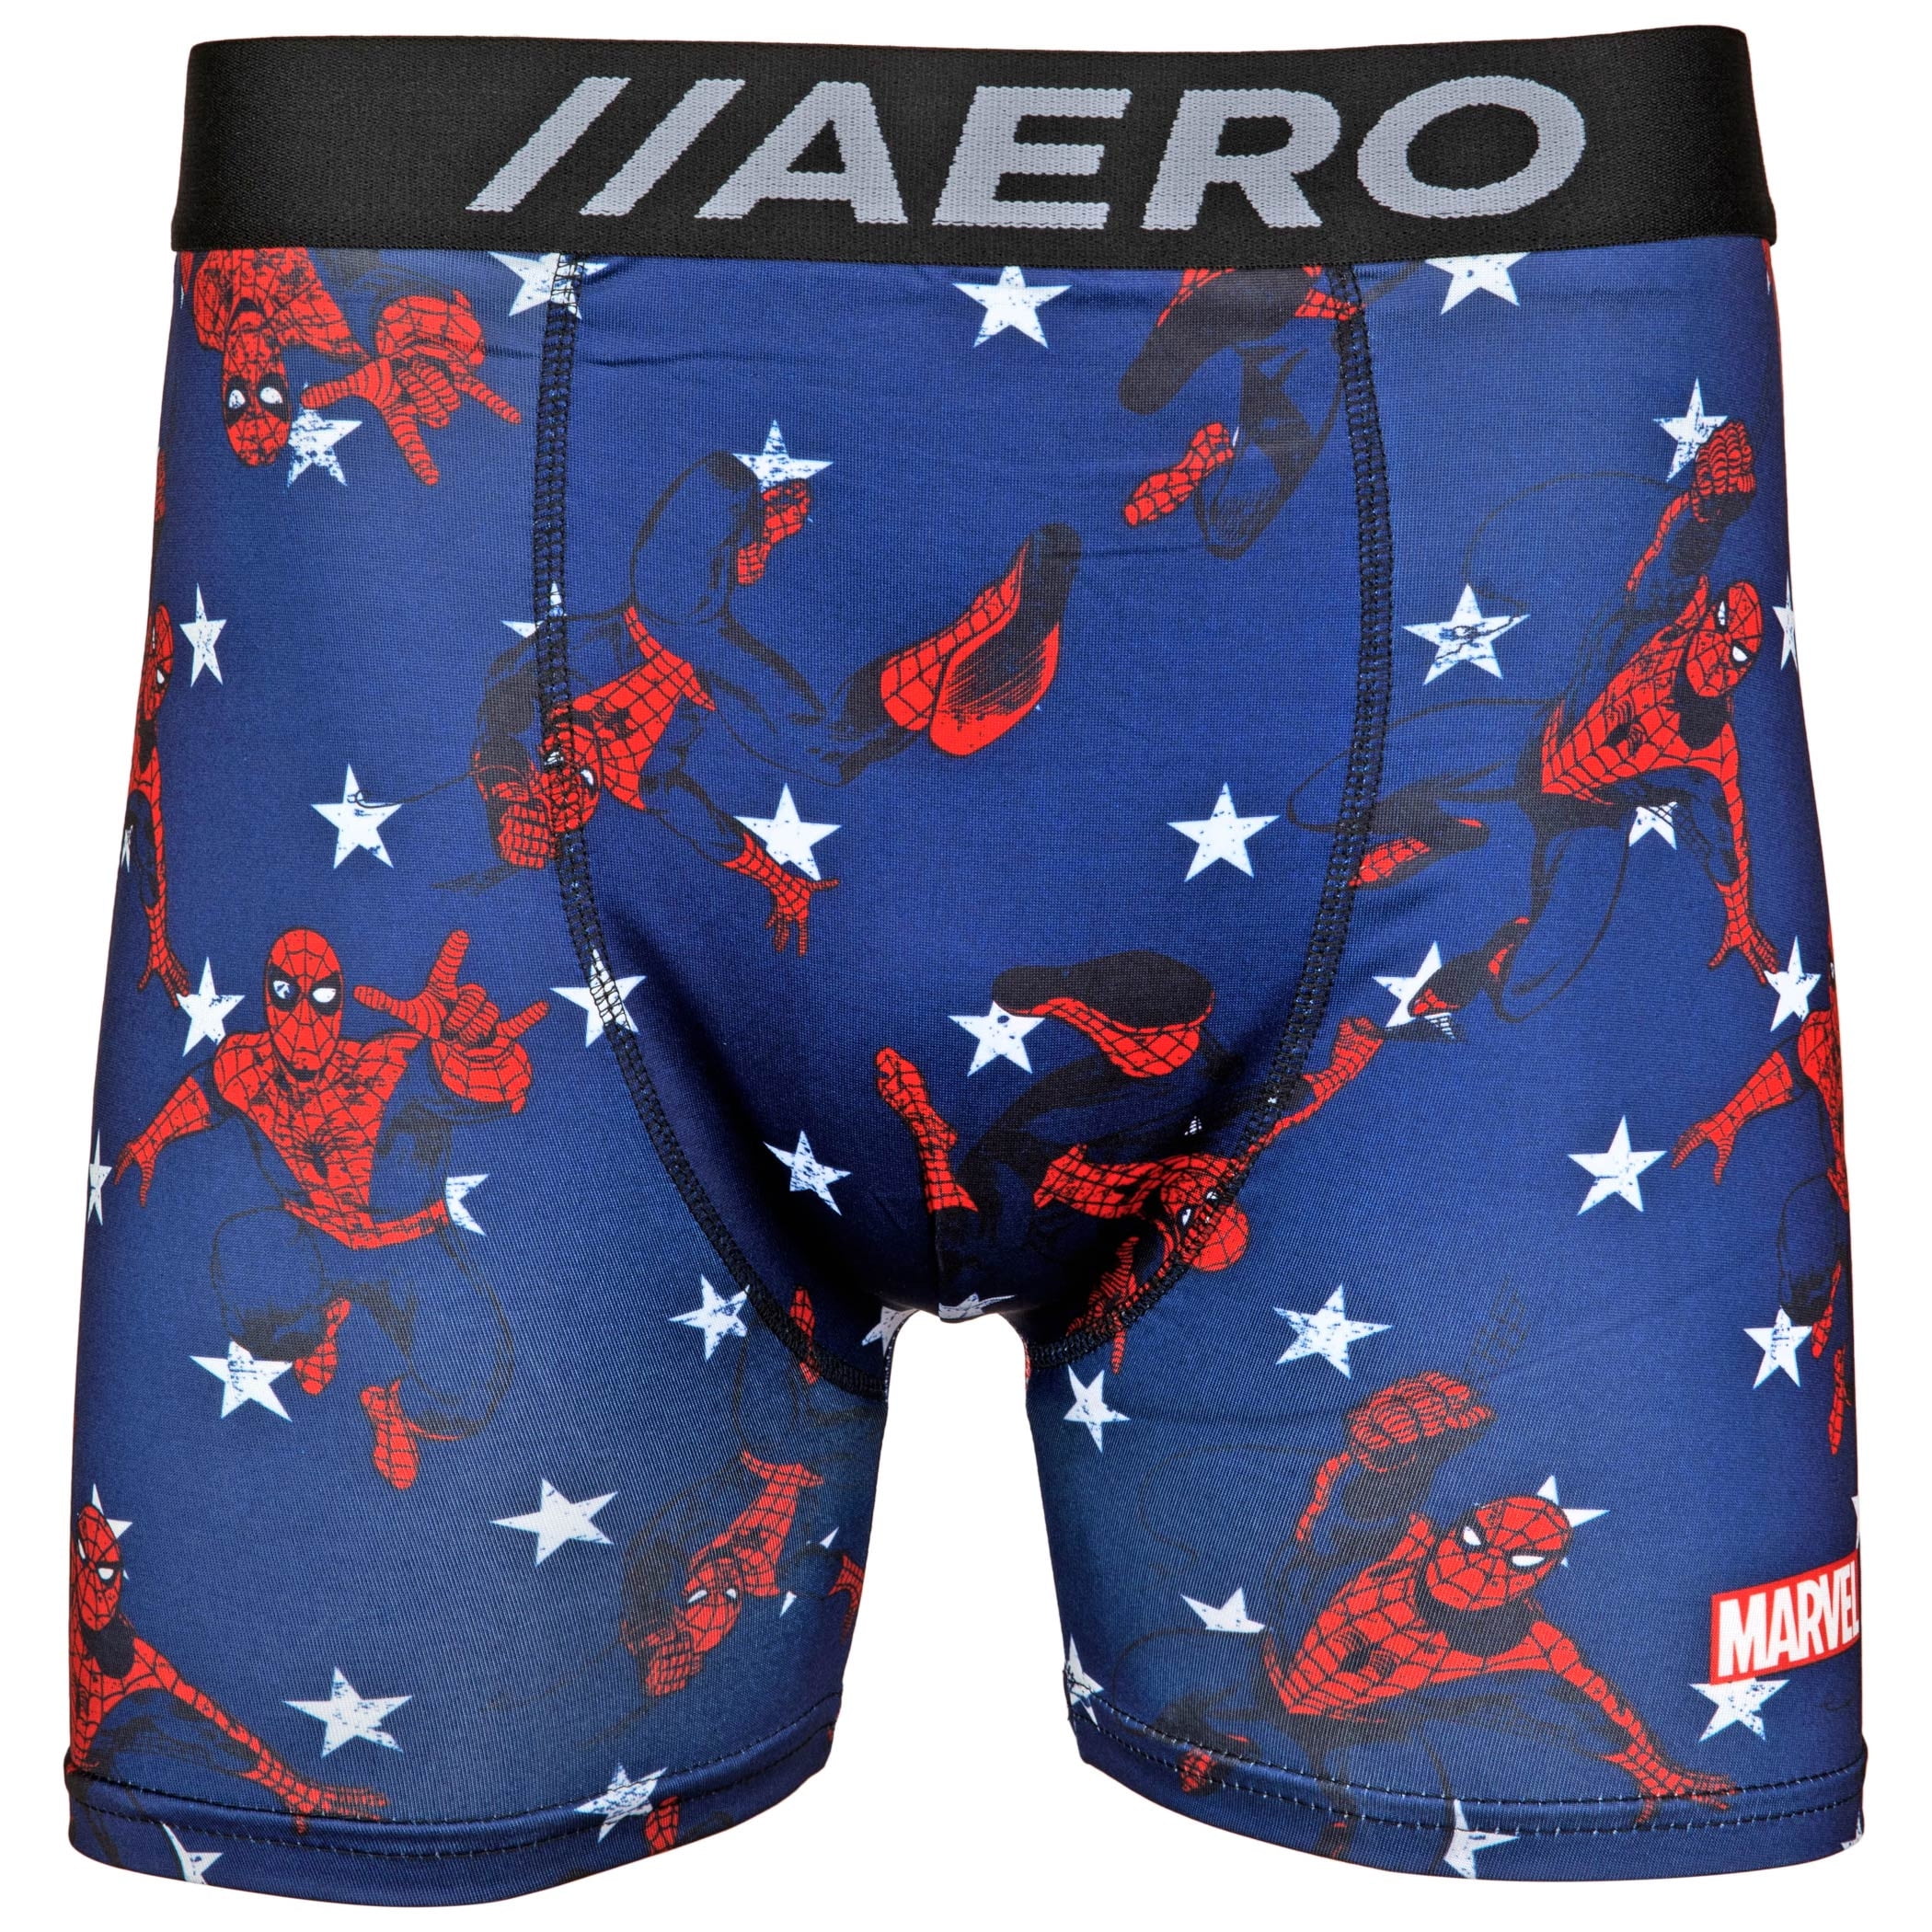 Aeropostale Men’s Spider-Man Boxer Briefs and Socks Set, 2-Piece